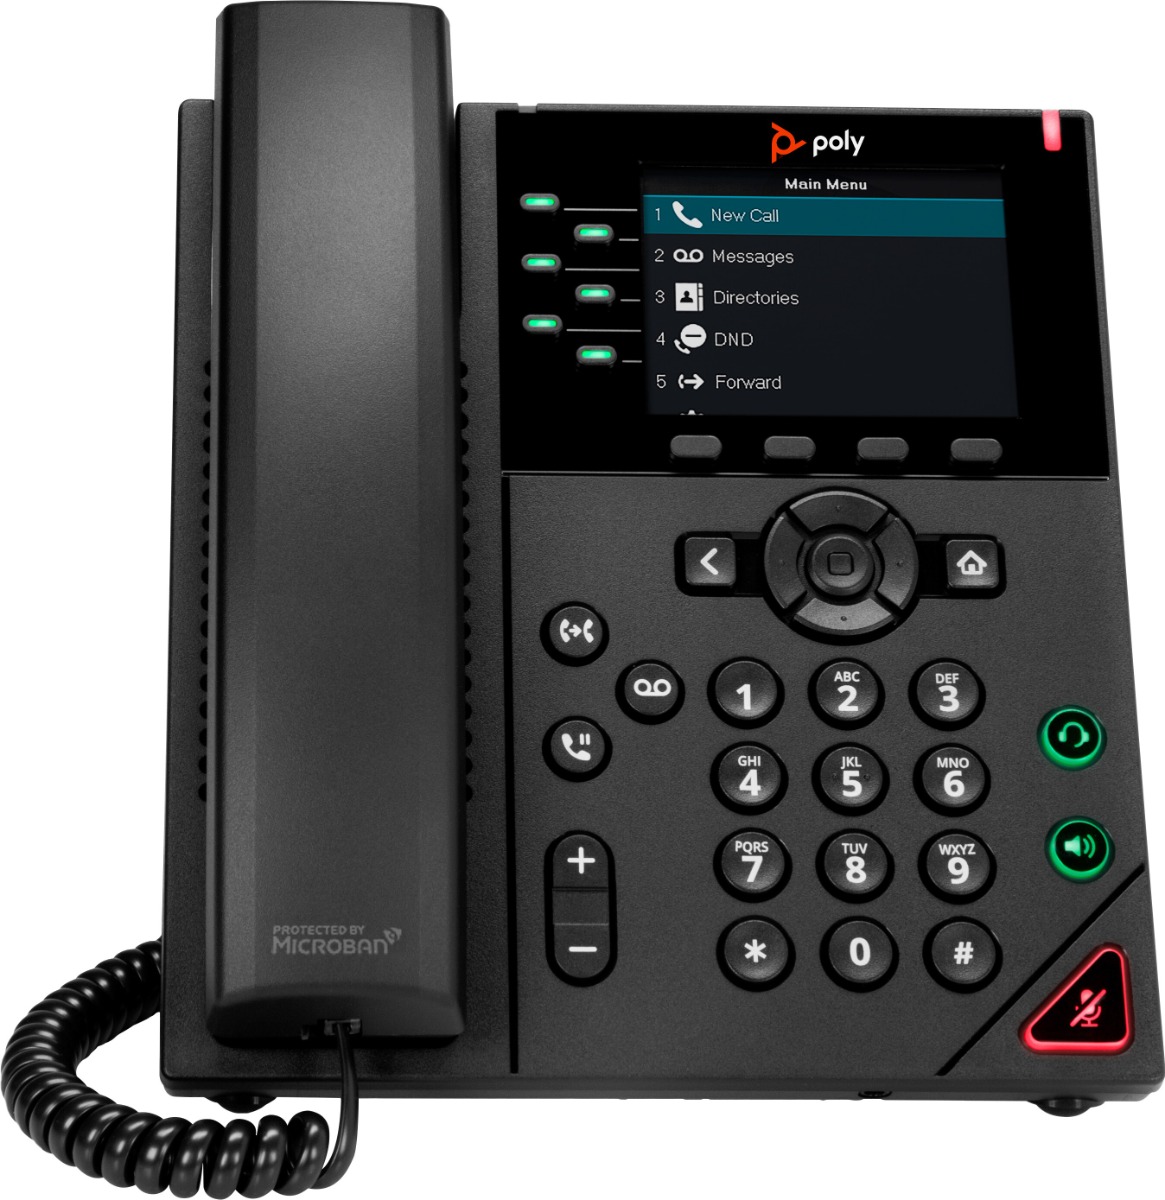 Where is the Polycom VVX 350 6-Line Mid-range Color IP Desktop Phone manufactured?